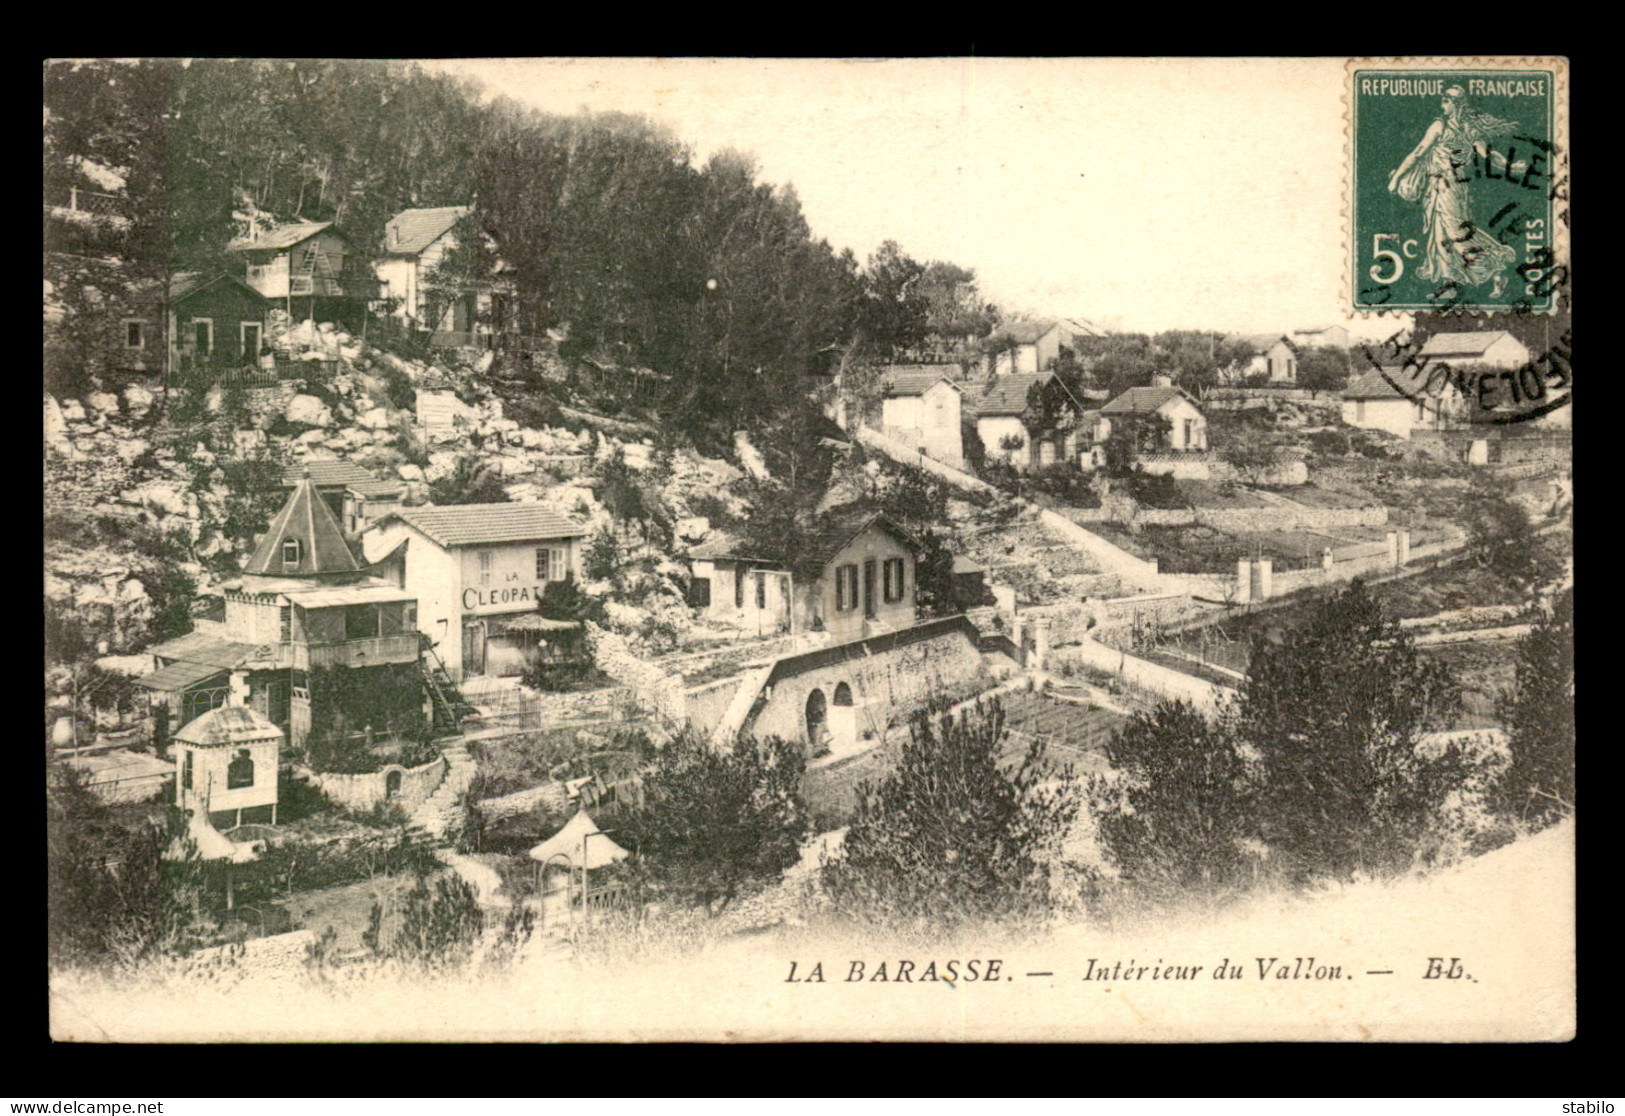 13 - MARSEILLE 11EME - LA BARASSE - INTERIEUR DU VALLON - Saint Marcel, La Barasse, Saintt Menet